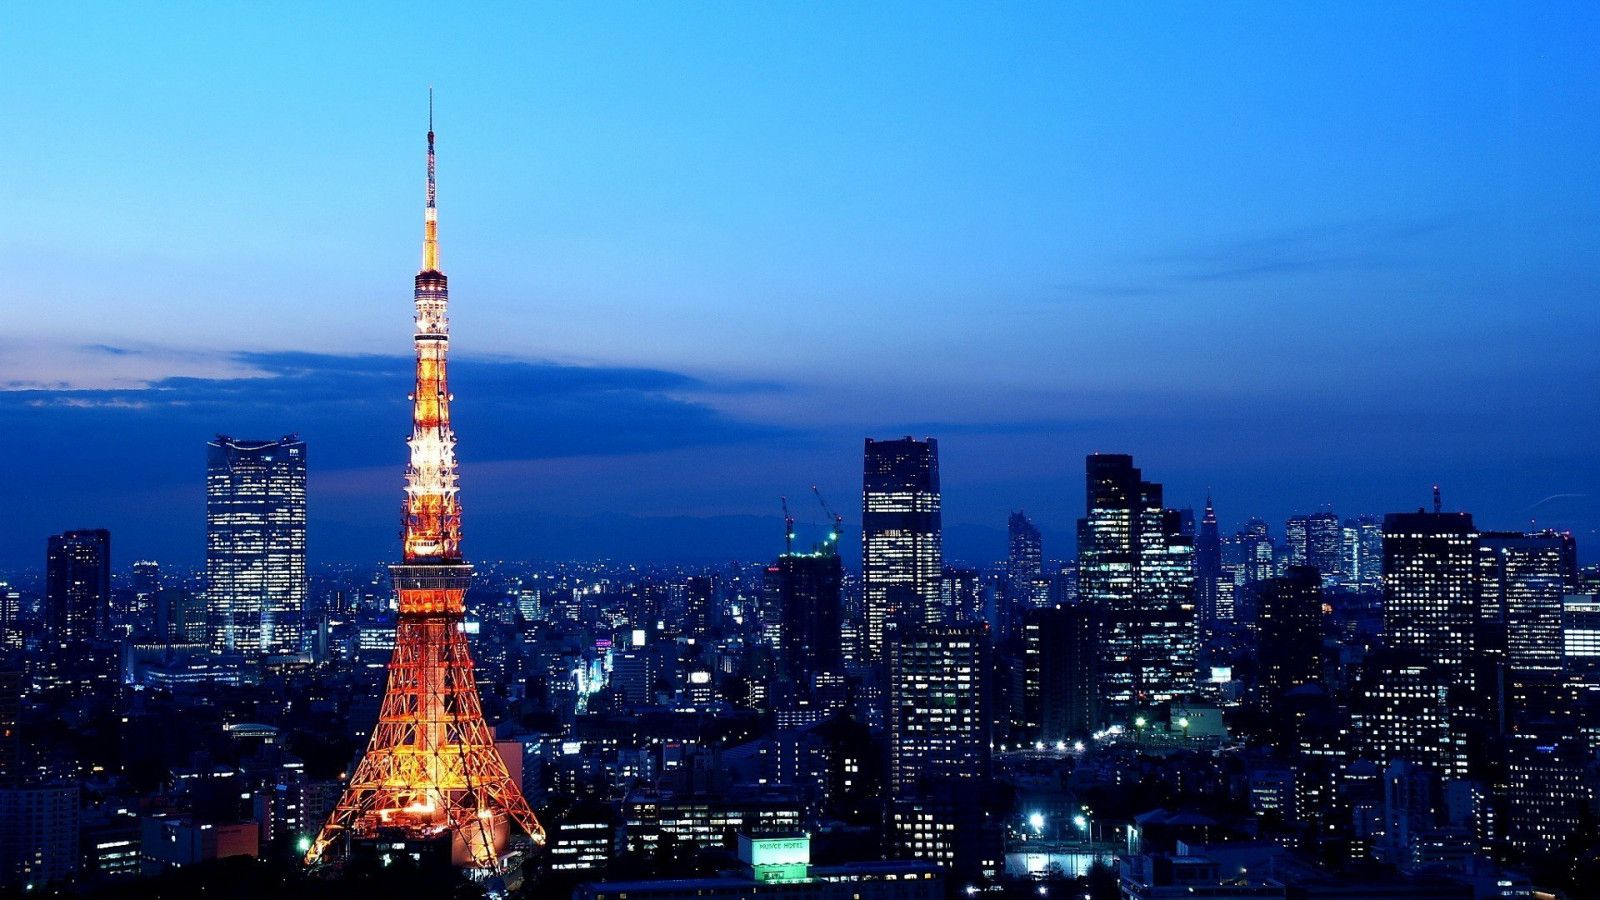 Wallpaper, 1920x1080 px, city lights, Japan, skyline, Tokyo Tower 1920x1080